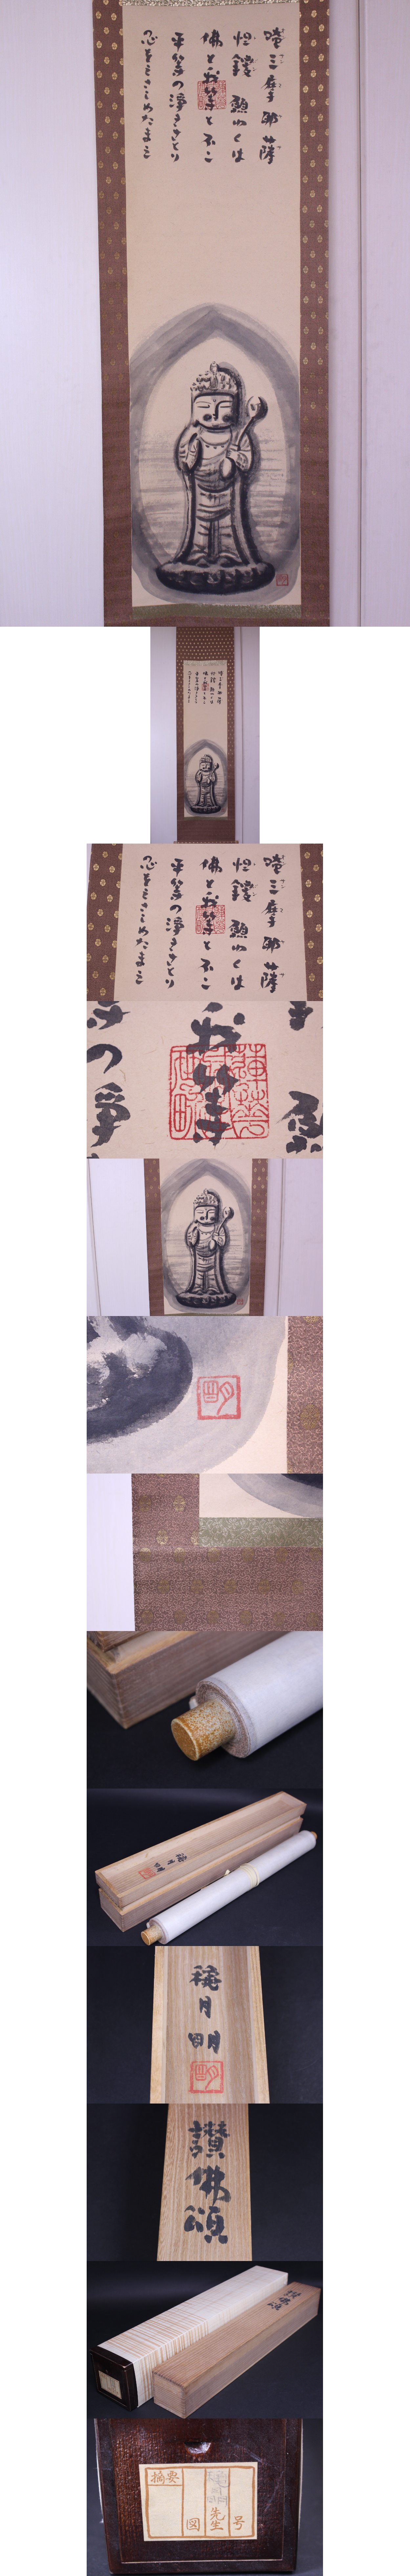 U-3060 穐月明「讃佛頌」画賛 紙本 水墨画 掛軸 共箱 二重箱 絵画